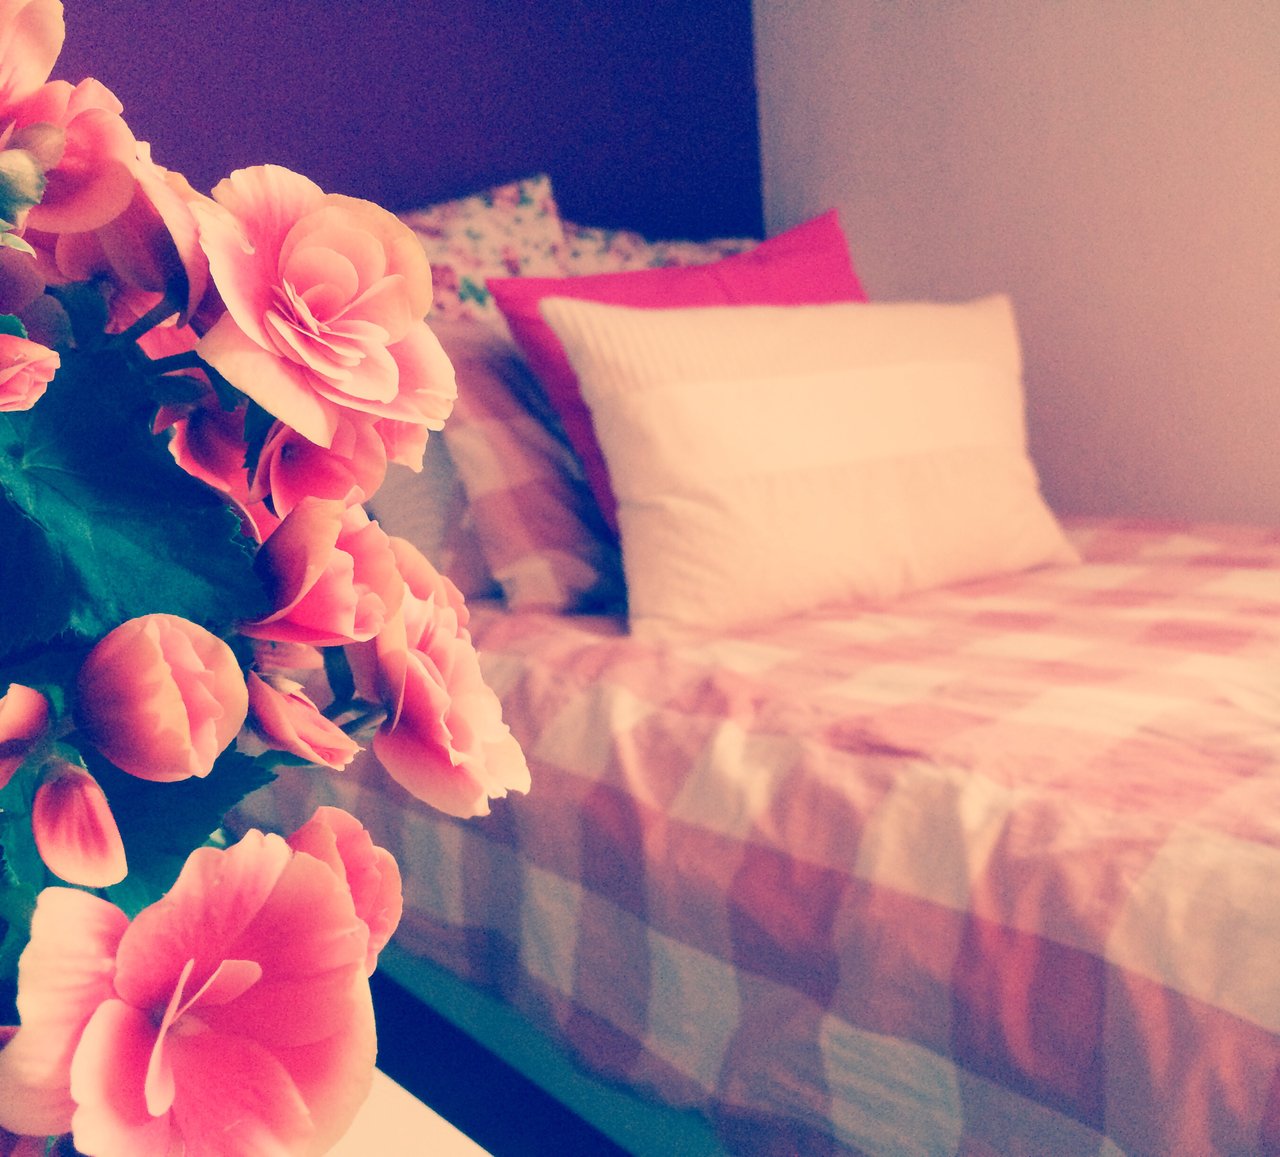 Цветы на кровати дома фото